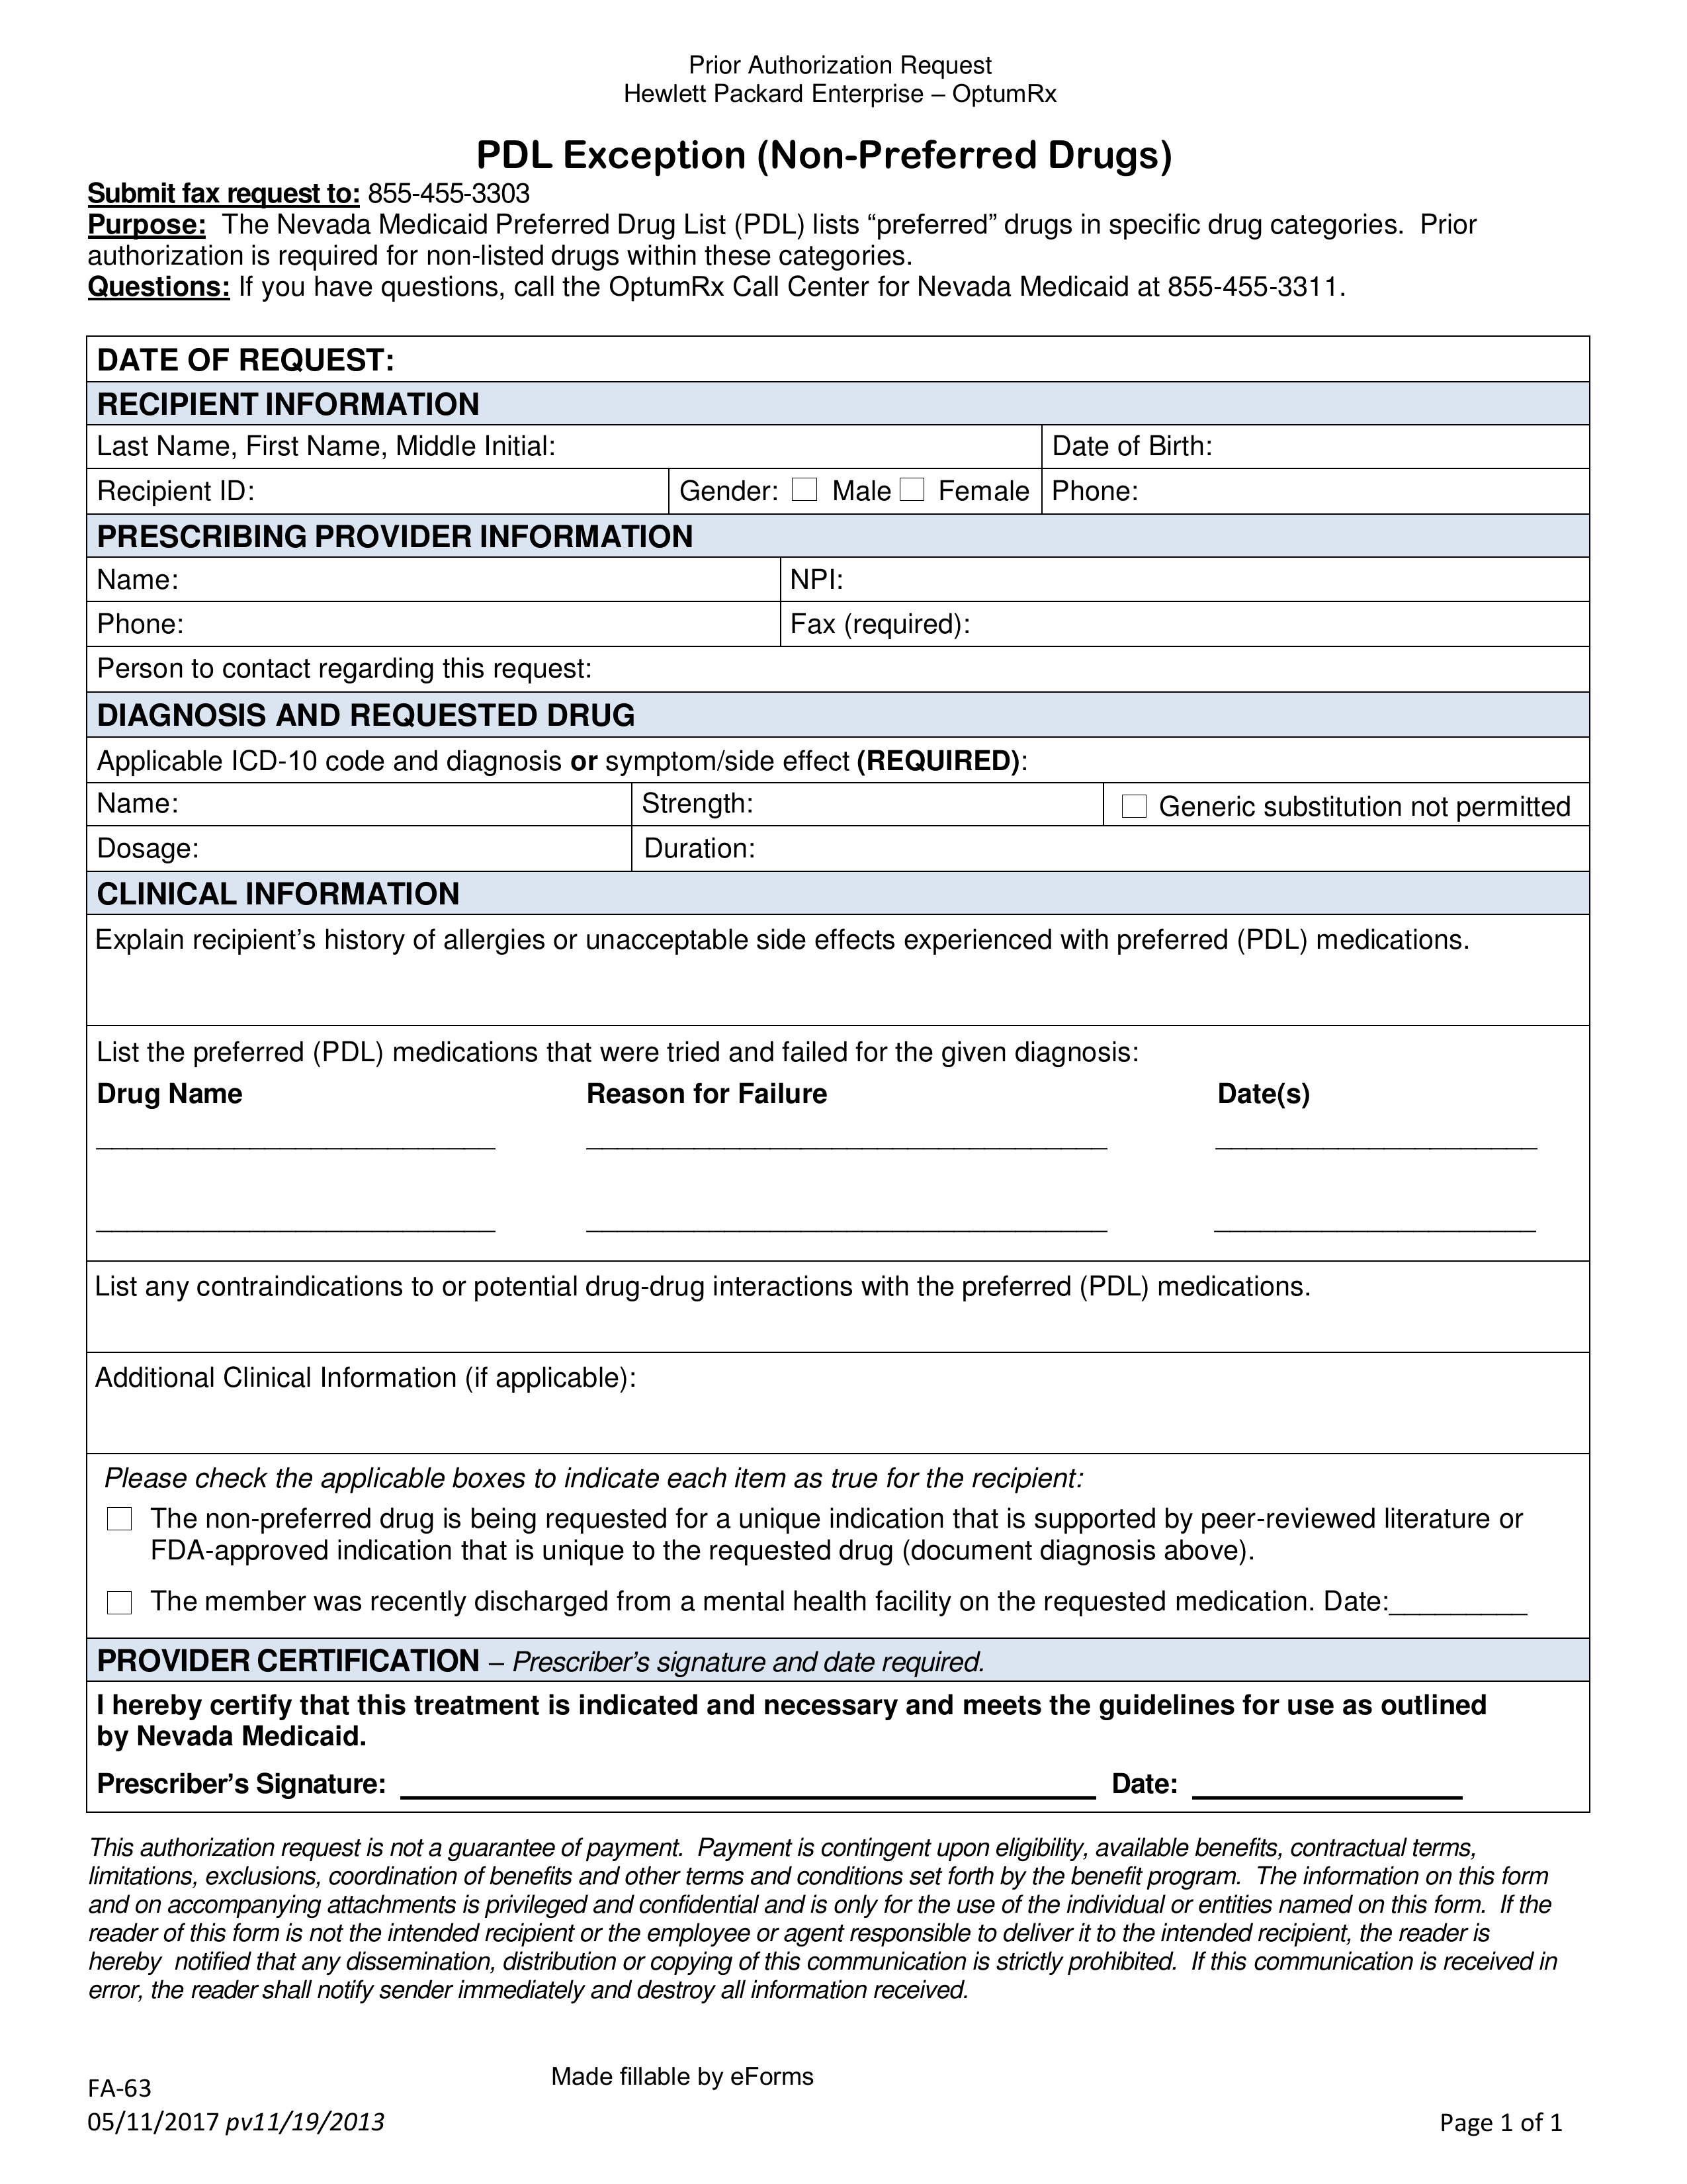 Nevada Medicaid Prior Authorization Form